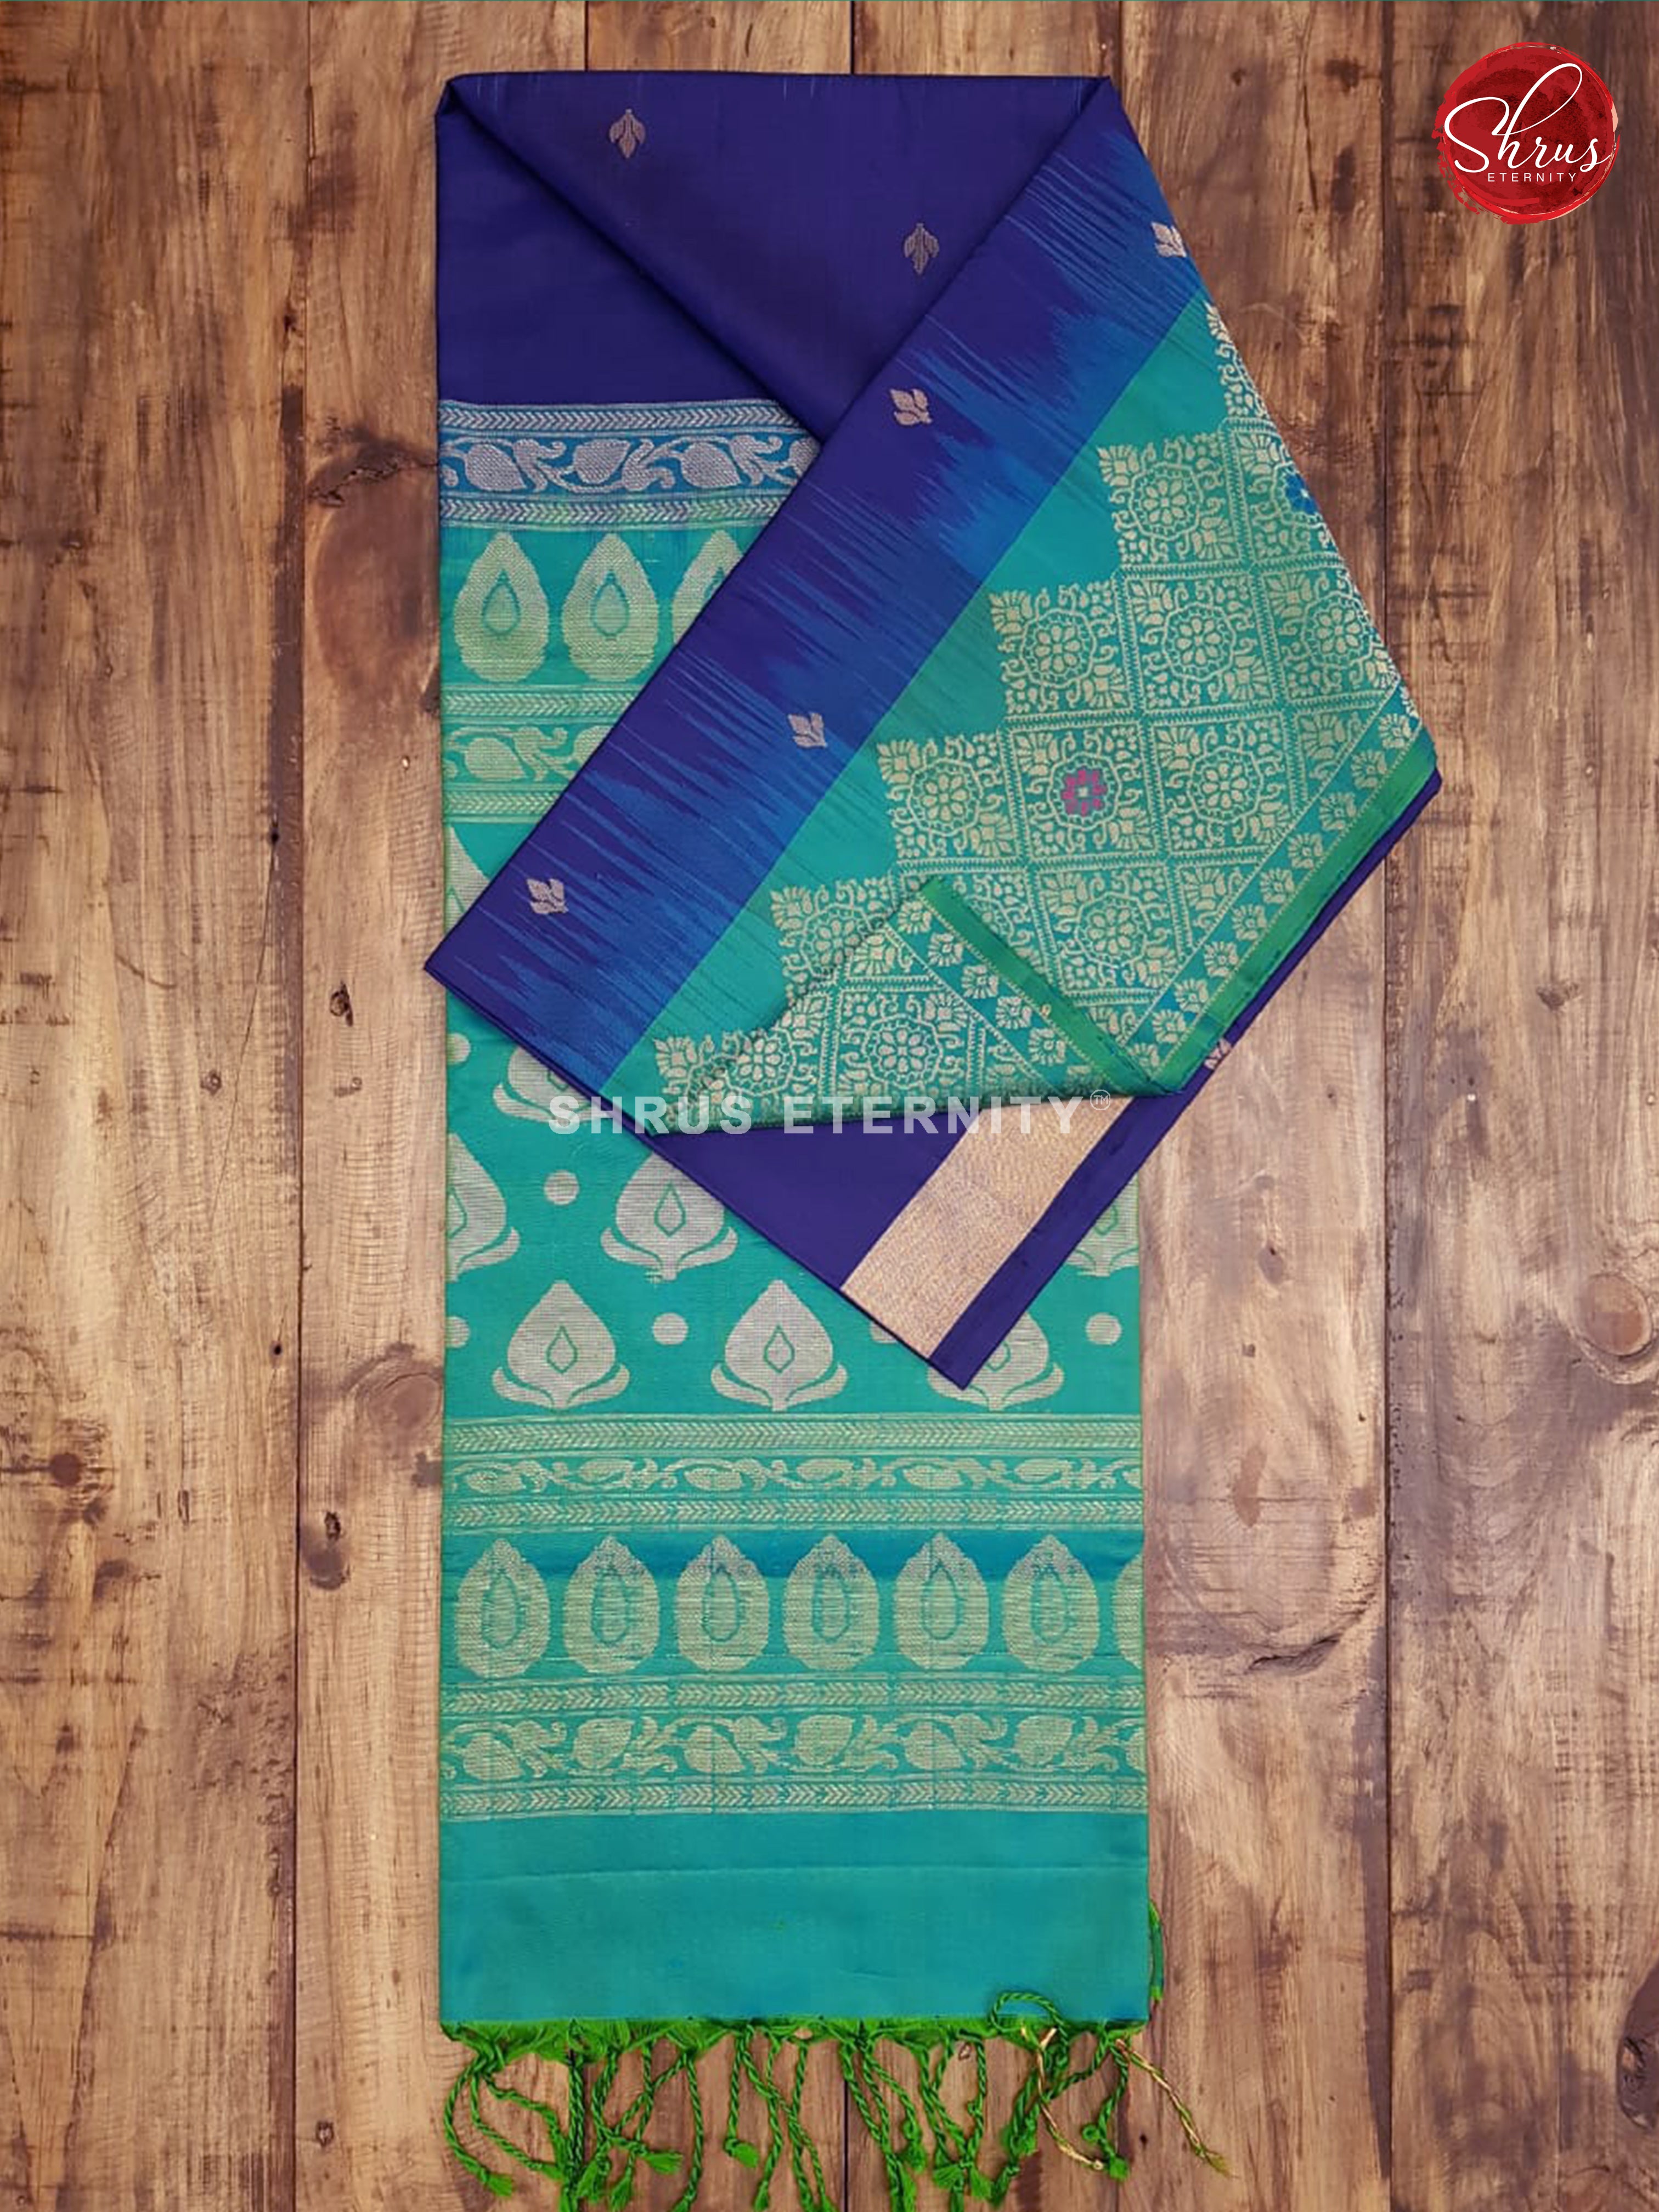 Blue & Green - Soft Silk - Shop on ShrusEternity.com